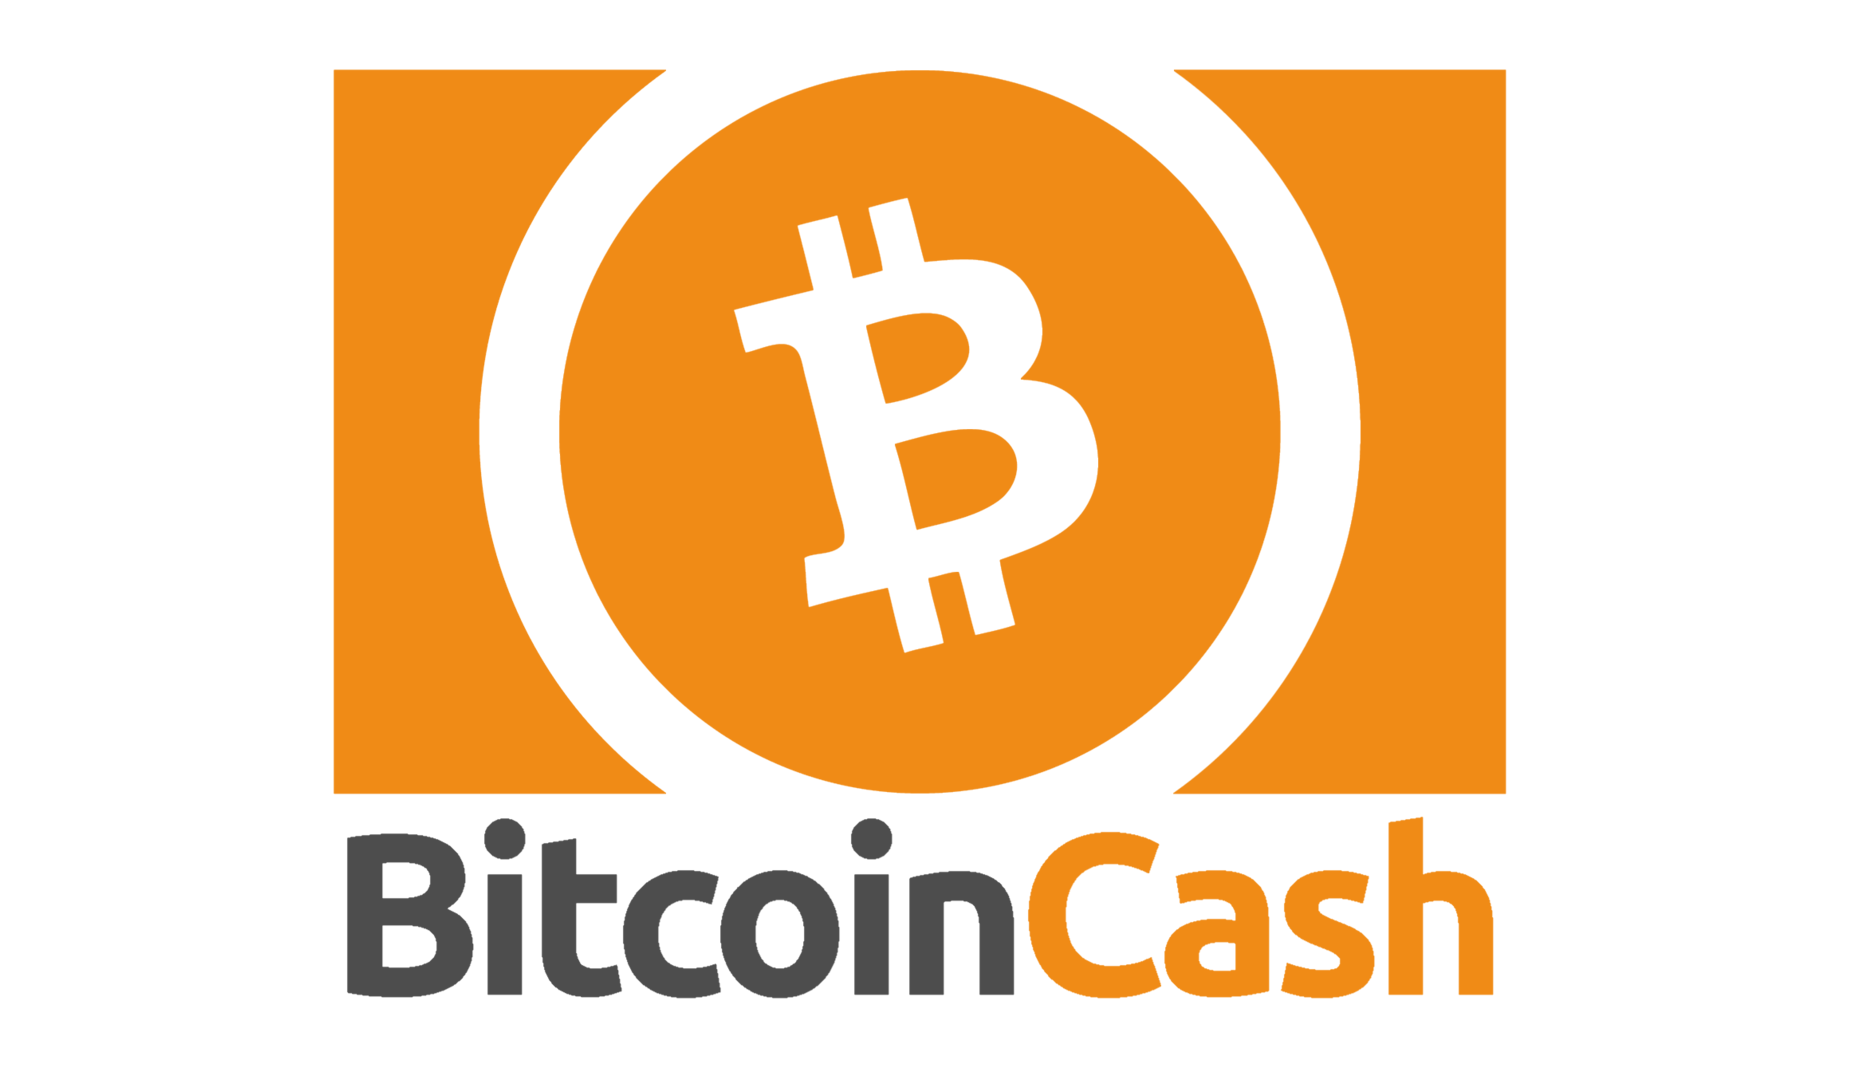 Binance supports bitcoin cash fork обмен биткоин сегодня самый выгодный курс